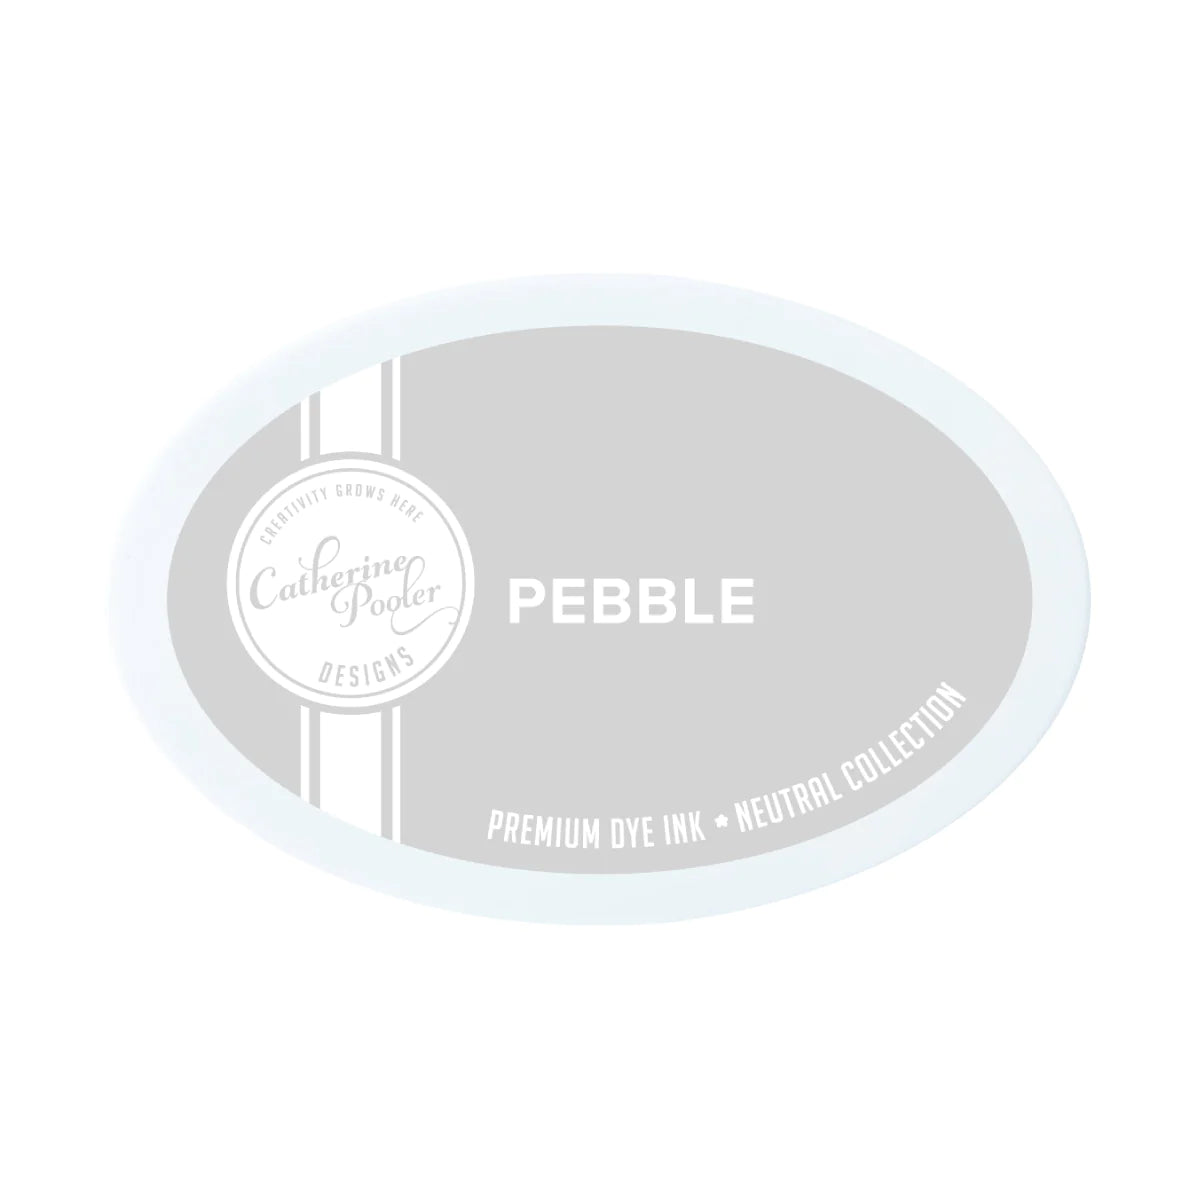 Pebble Premium Dye Ink Pad - Neutral Collection